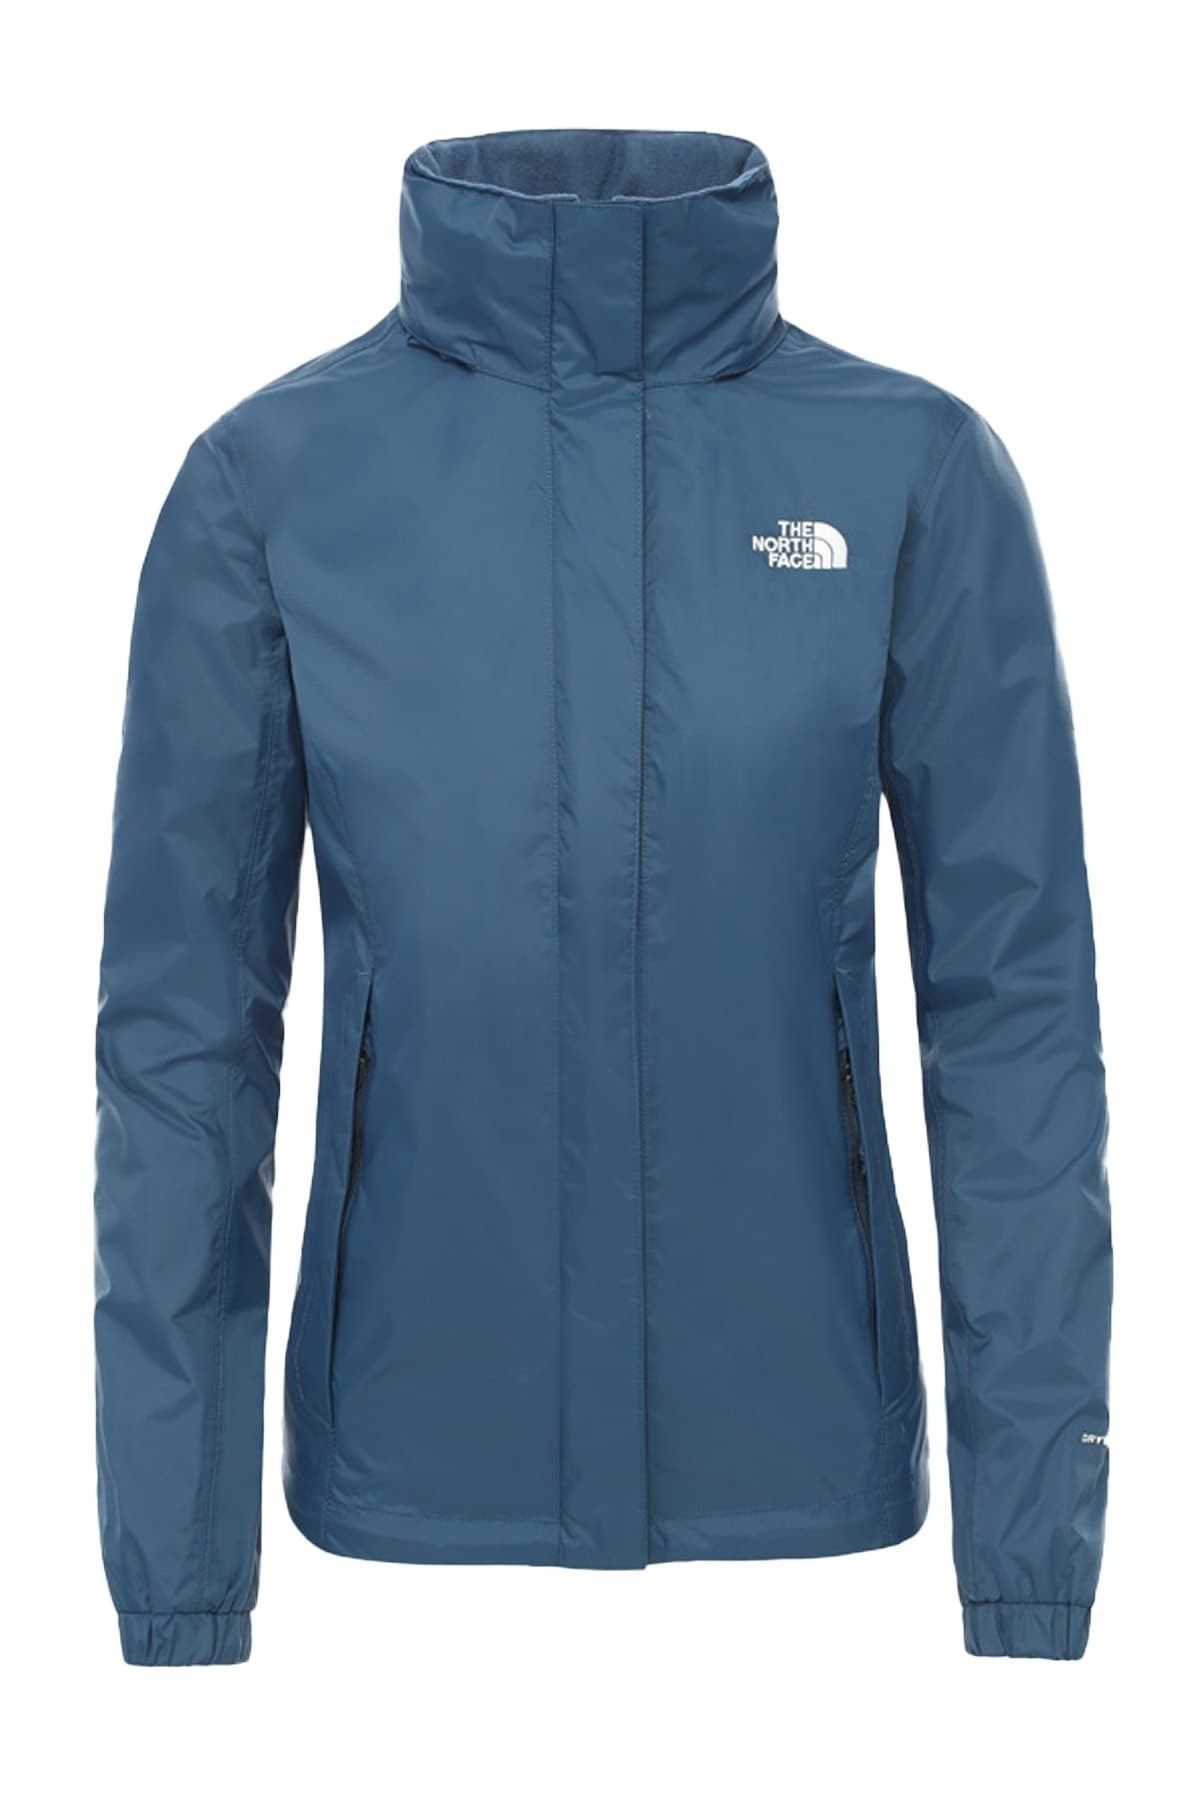 The North Face Resolve Jacket - Eu Kadın Ceket -